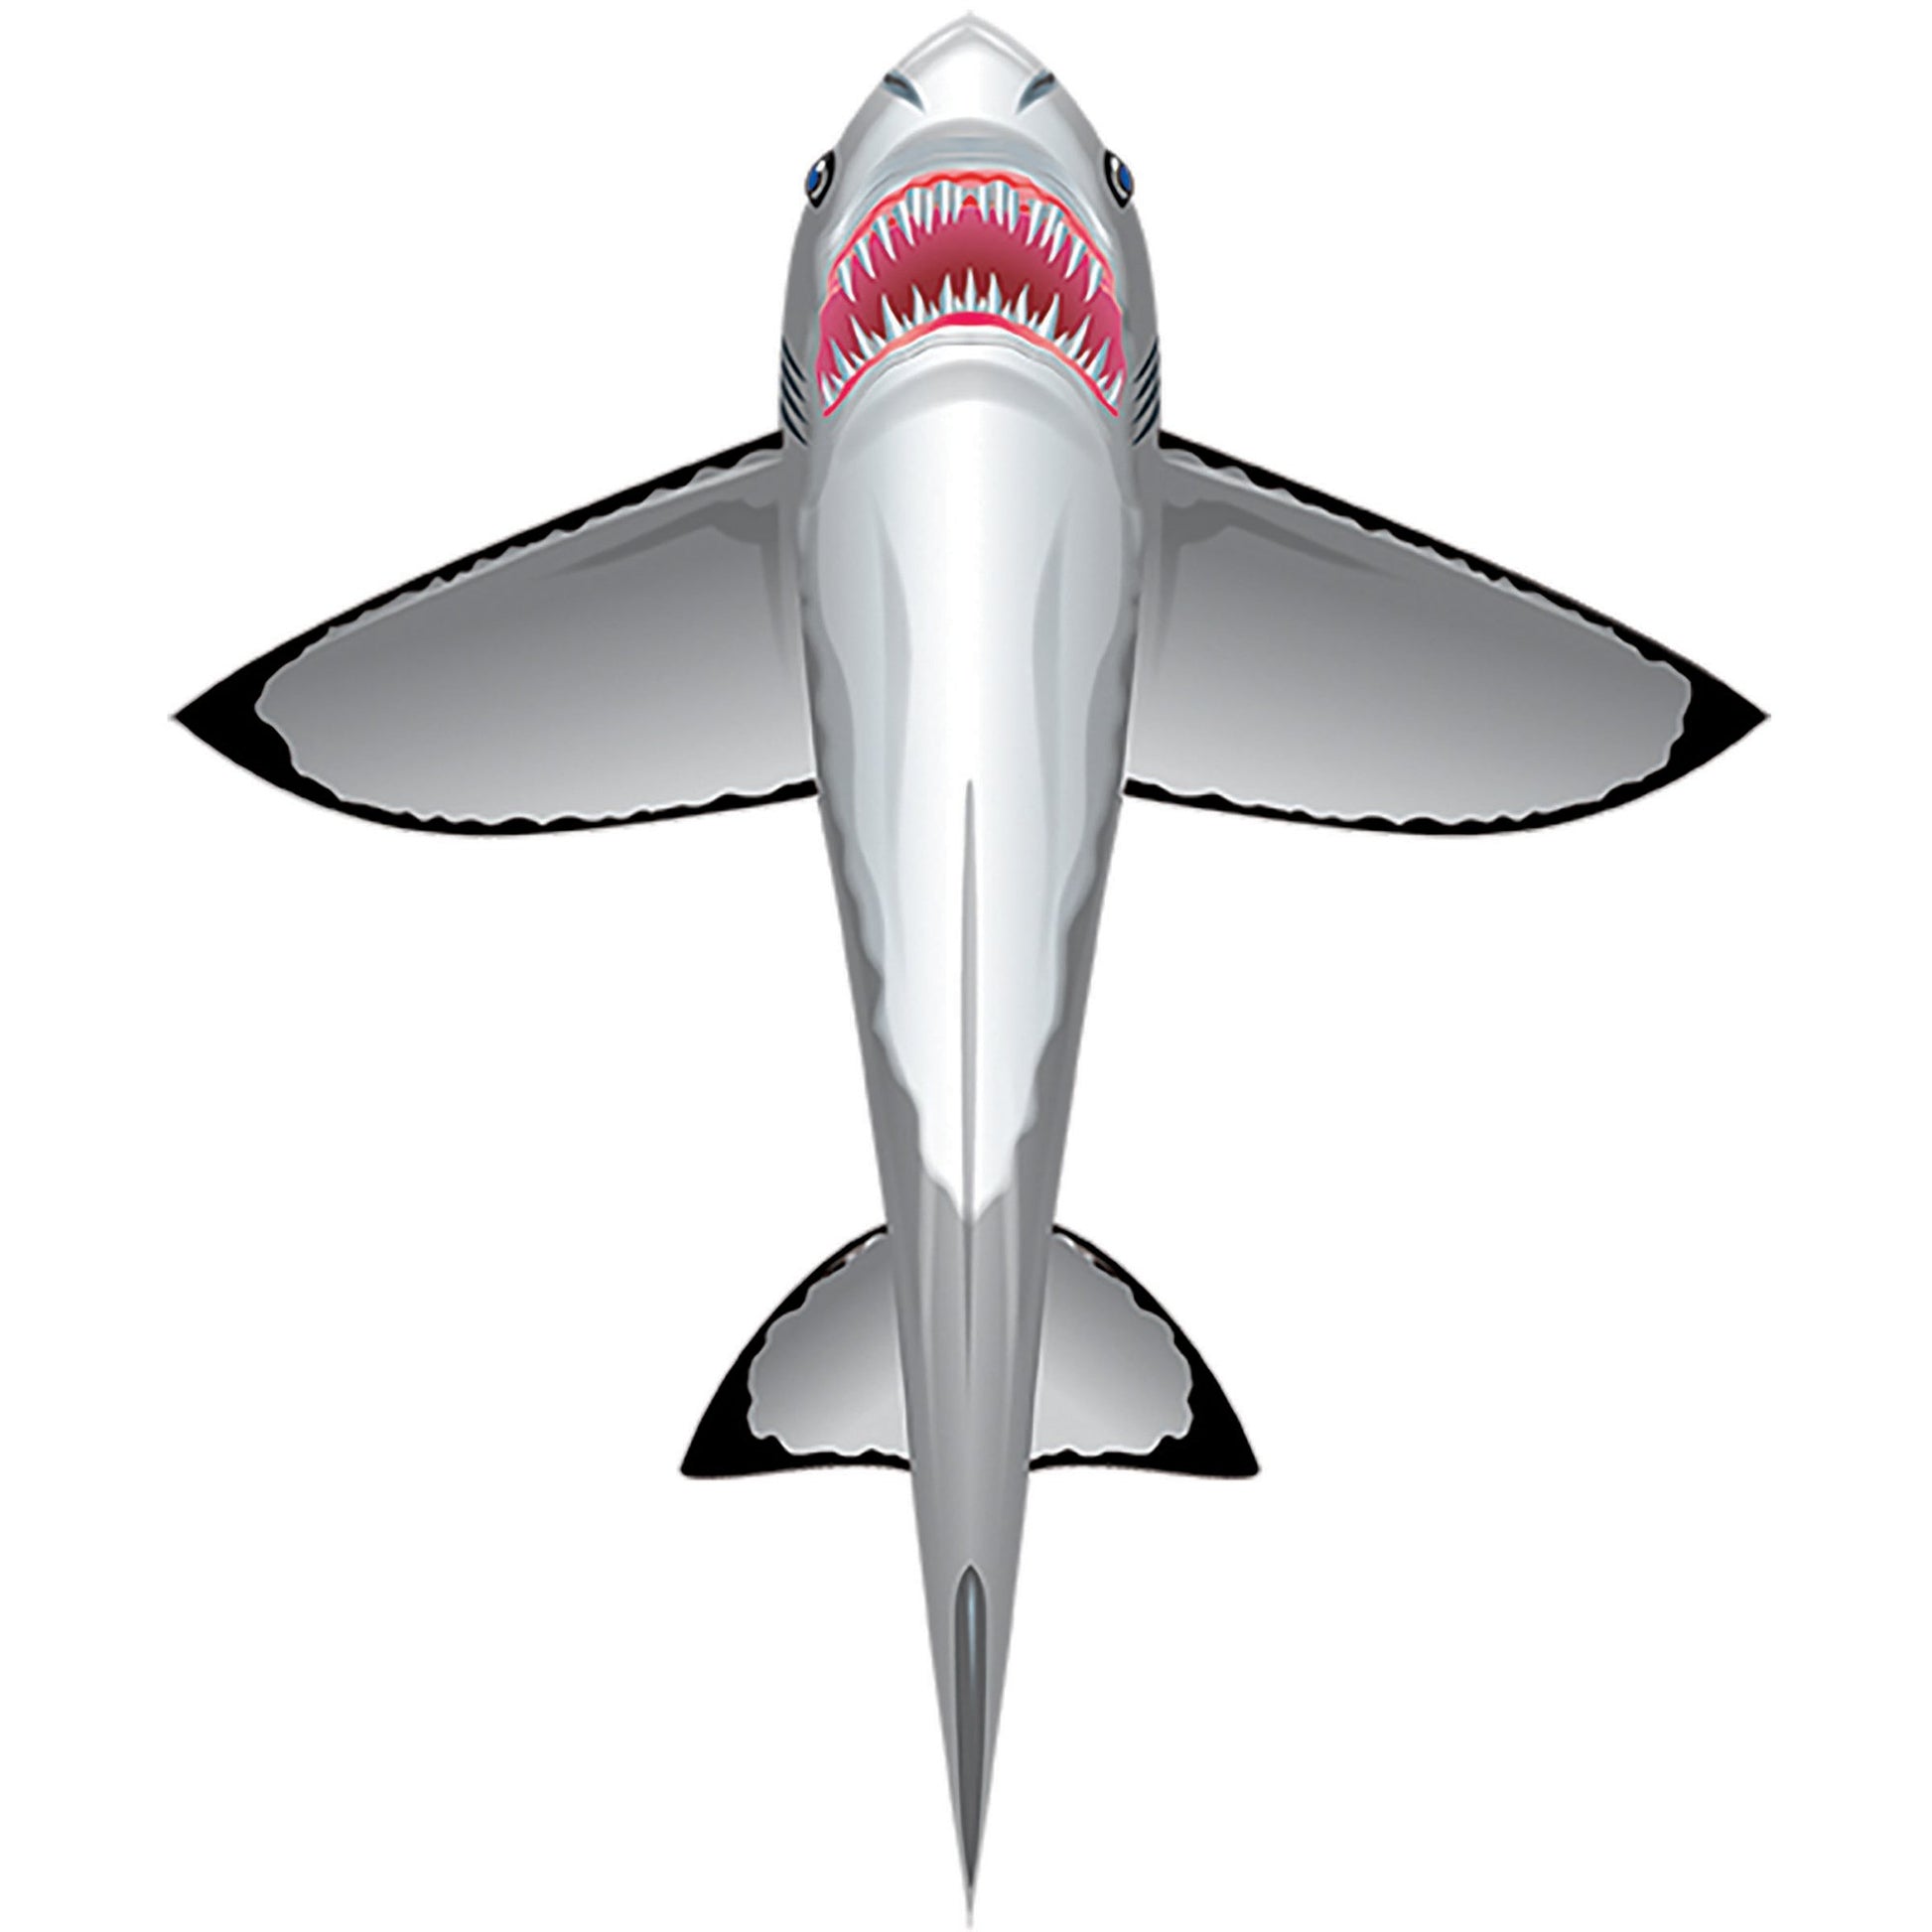 windnsun sealife great white shark nylon kite